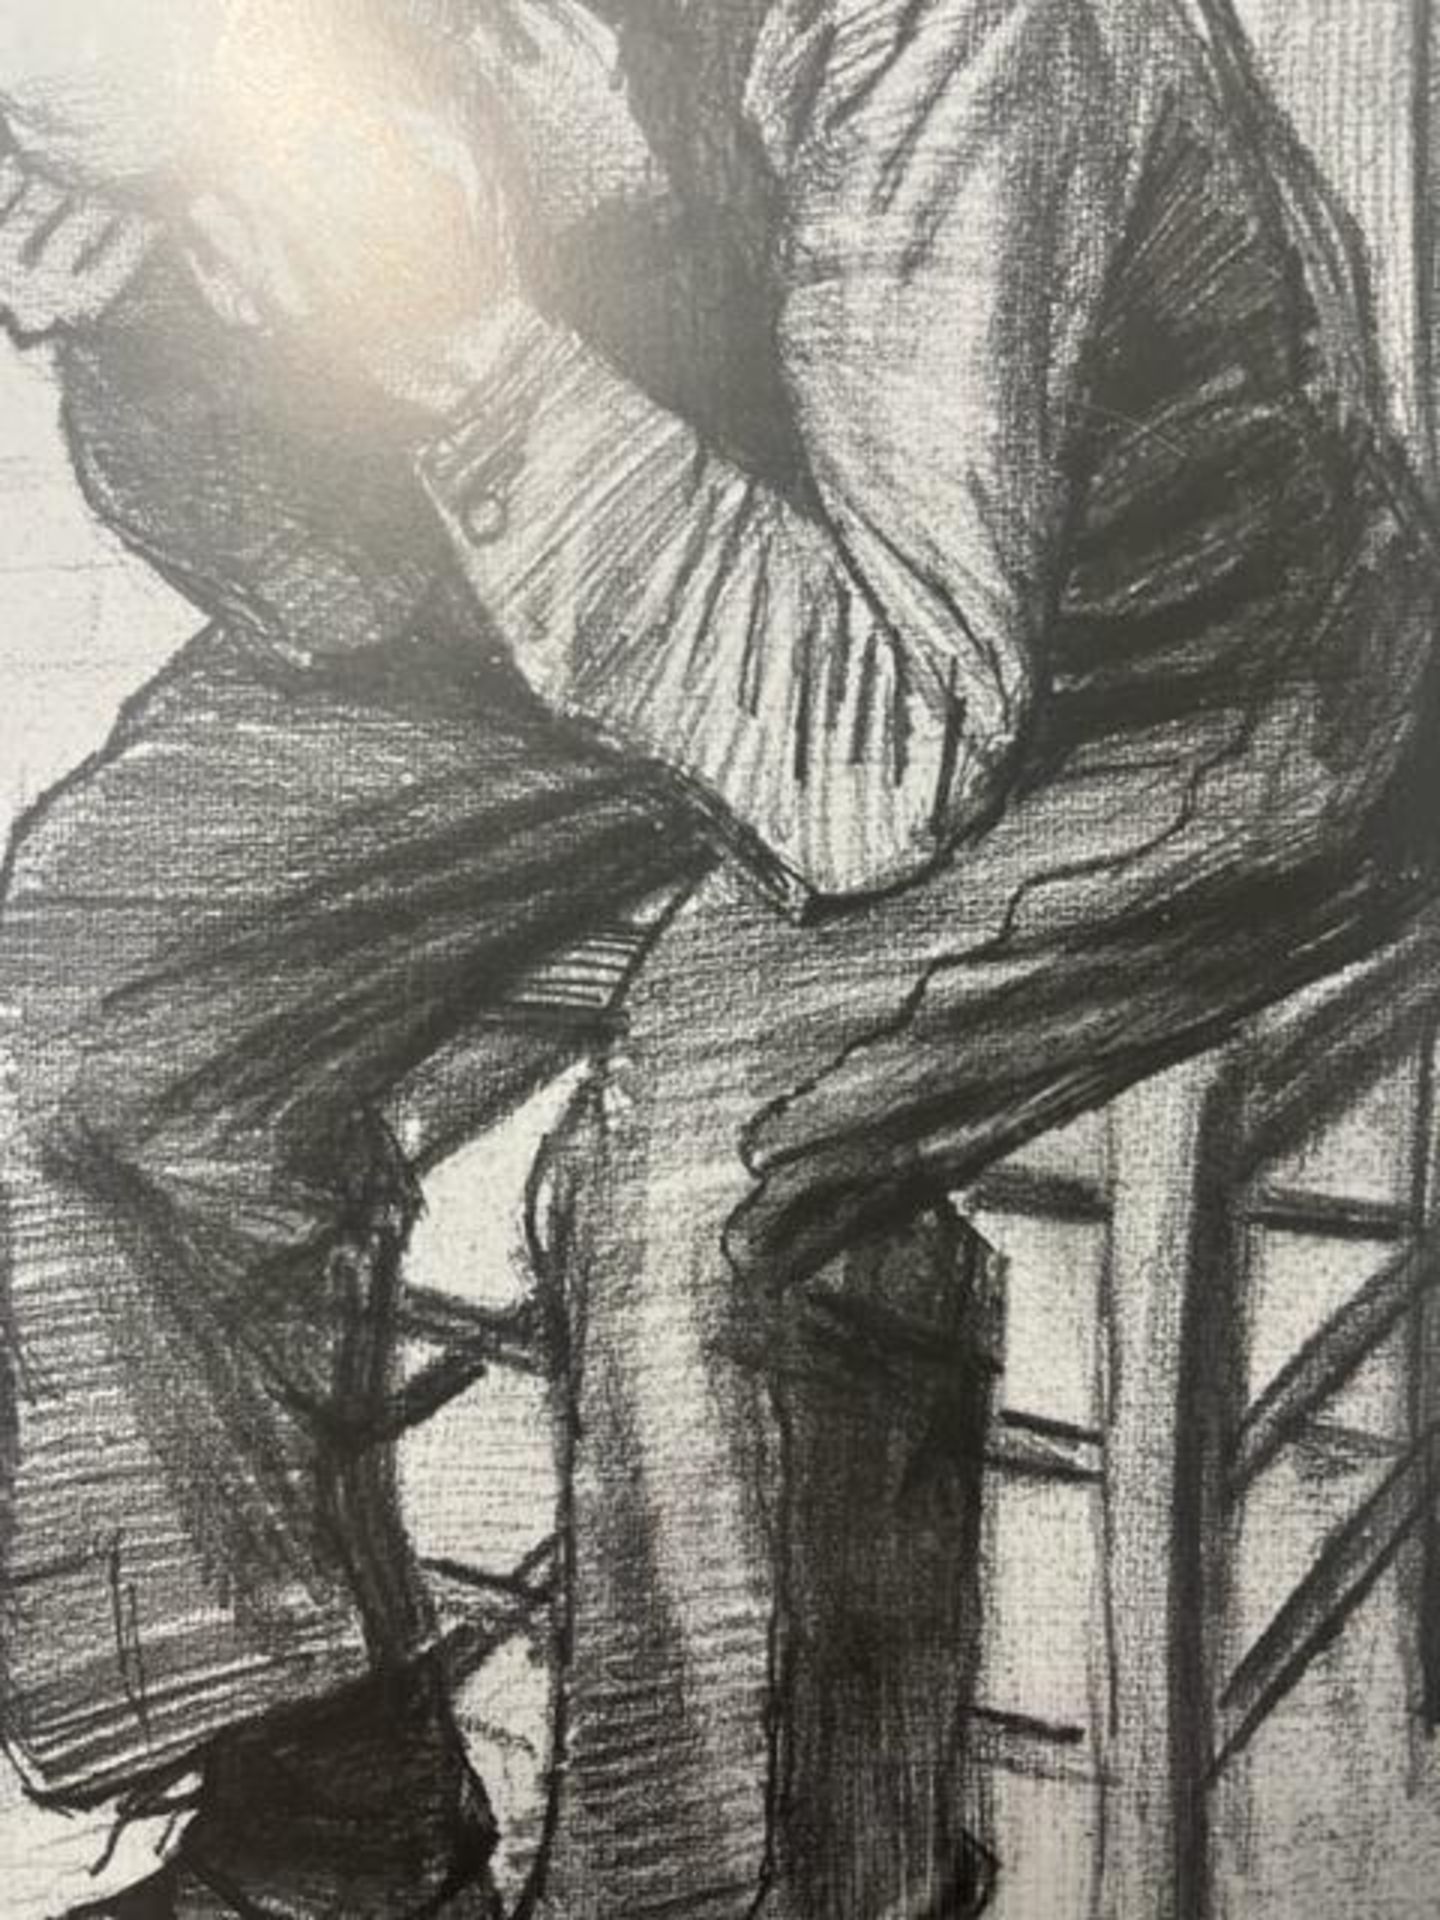 Vincent van Gogh "Old Man in Grief" Print. - Image 5 of 6